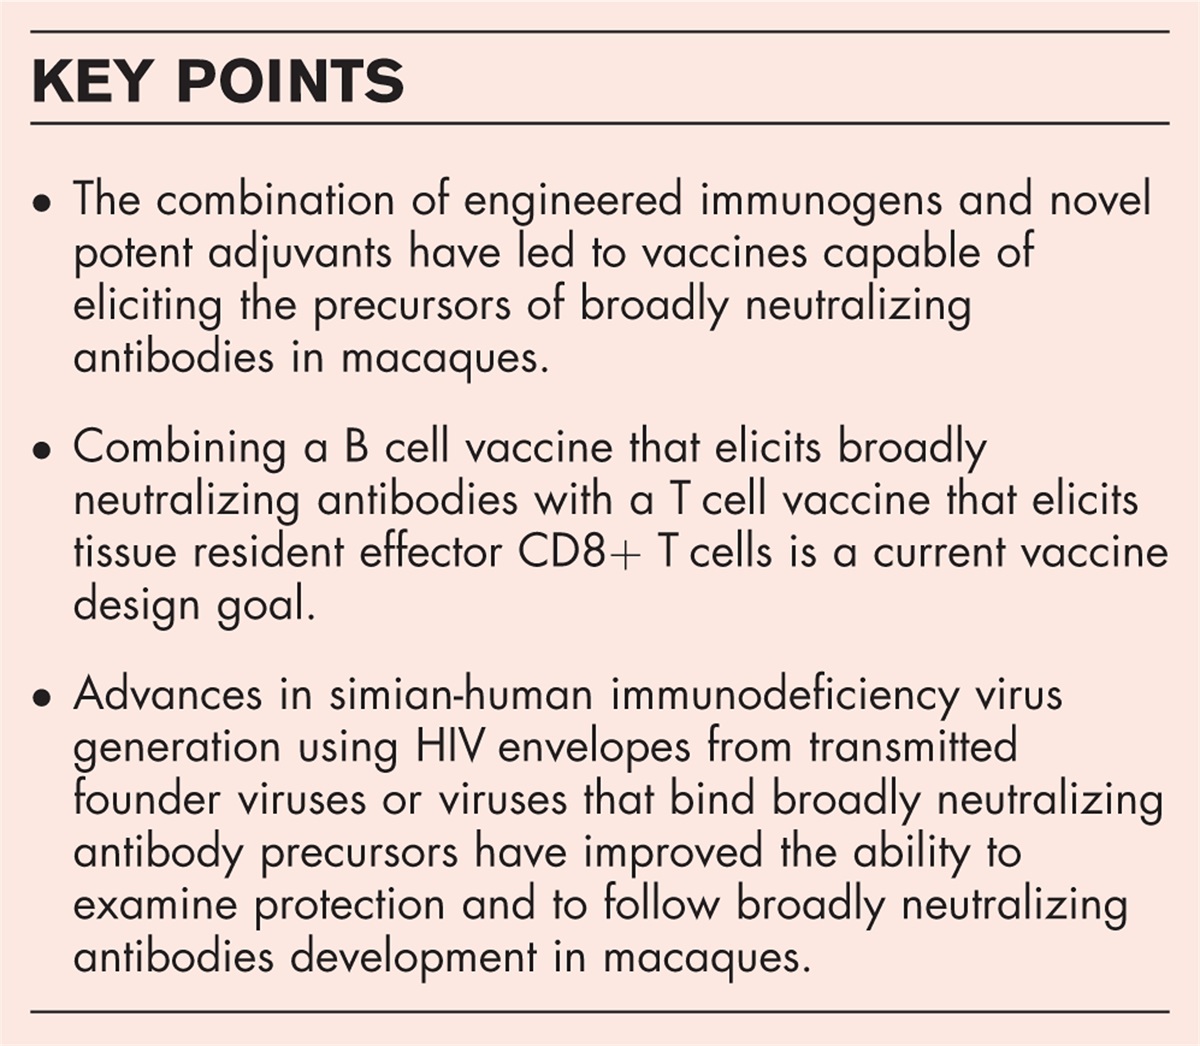 Guiding HIV-1 vaccine development with preclinical nonhuman primate research